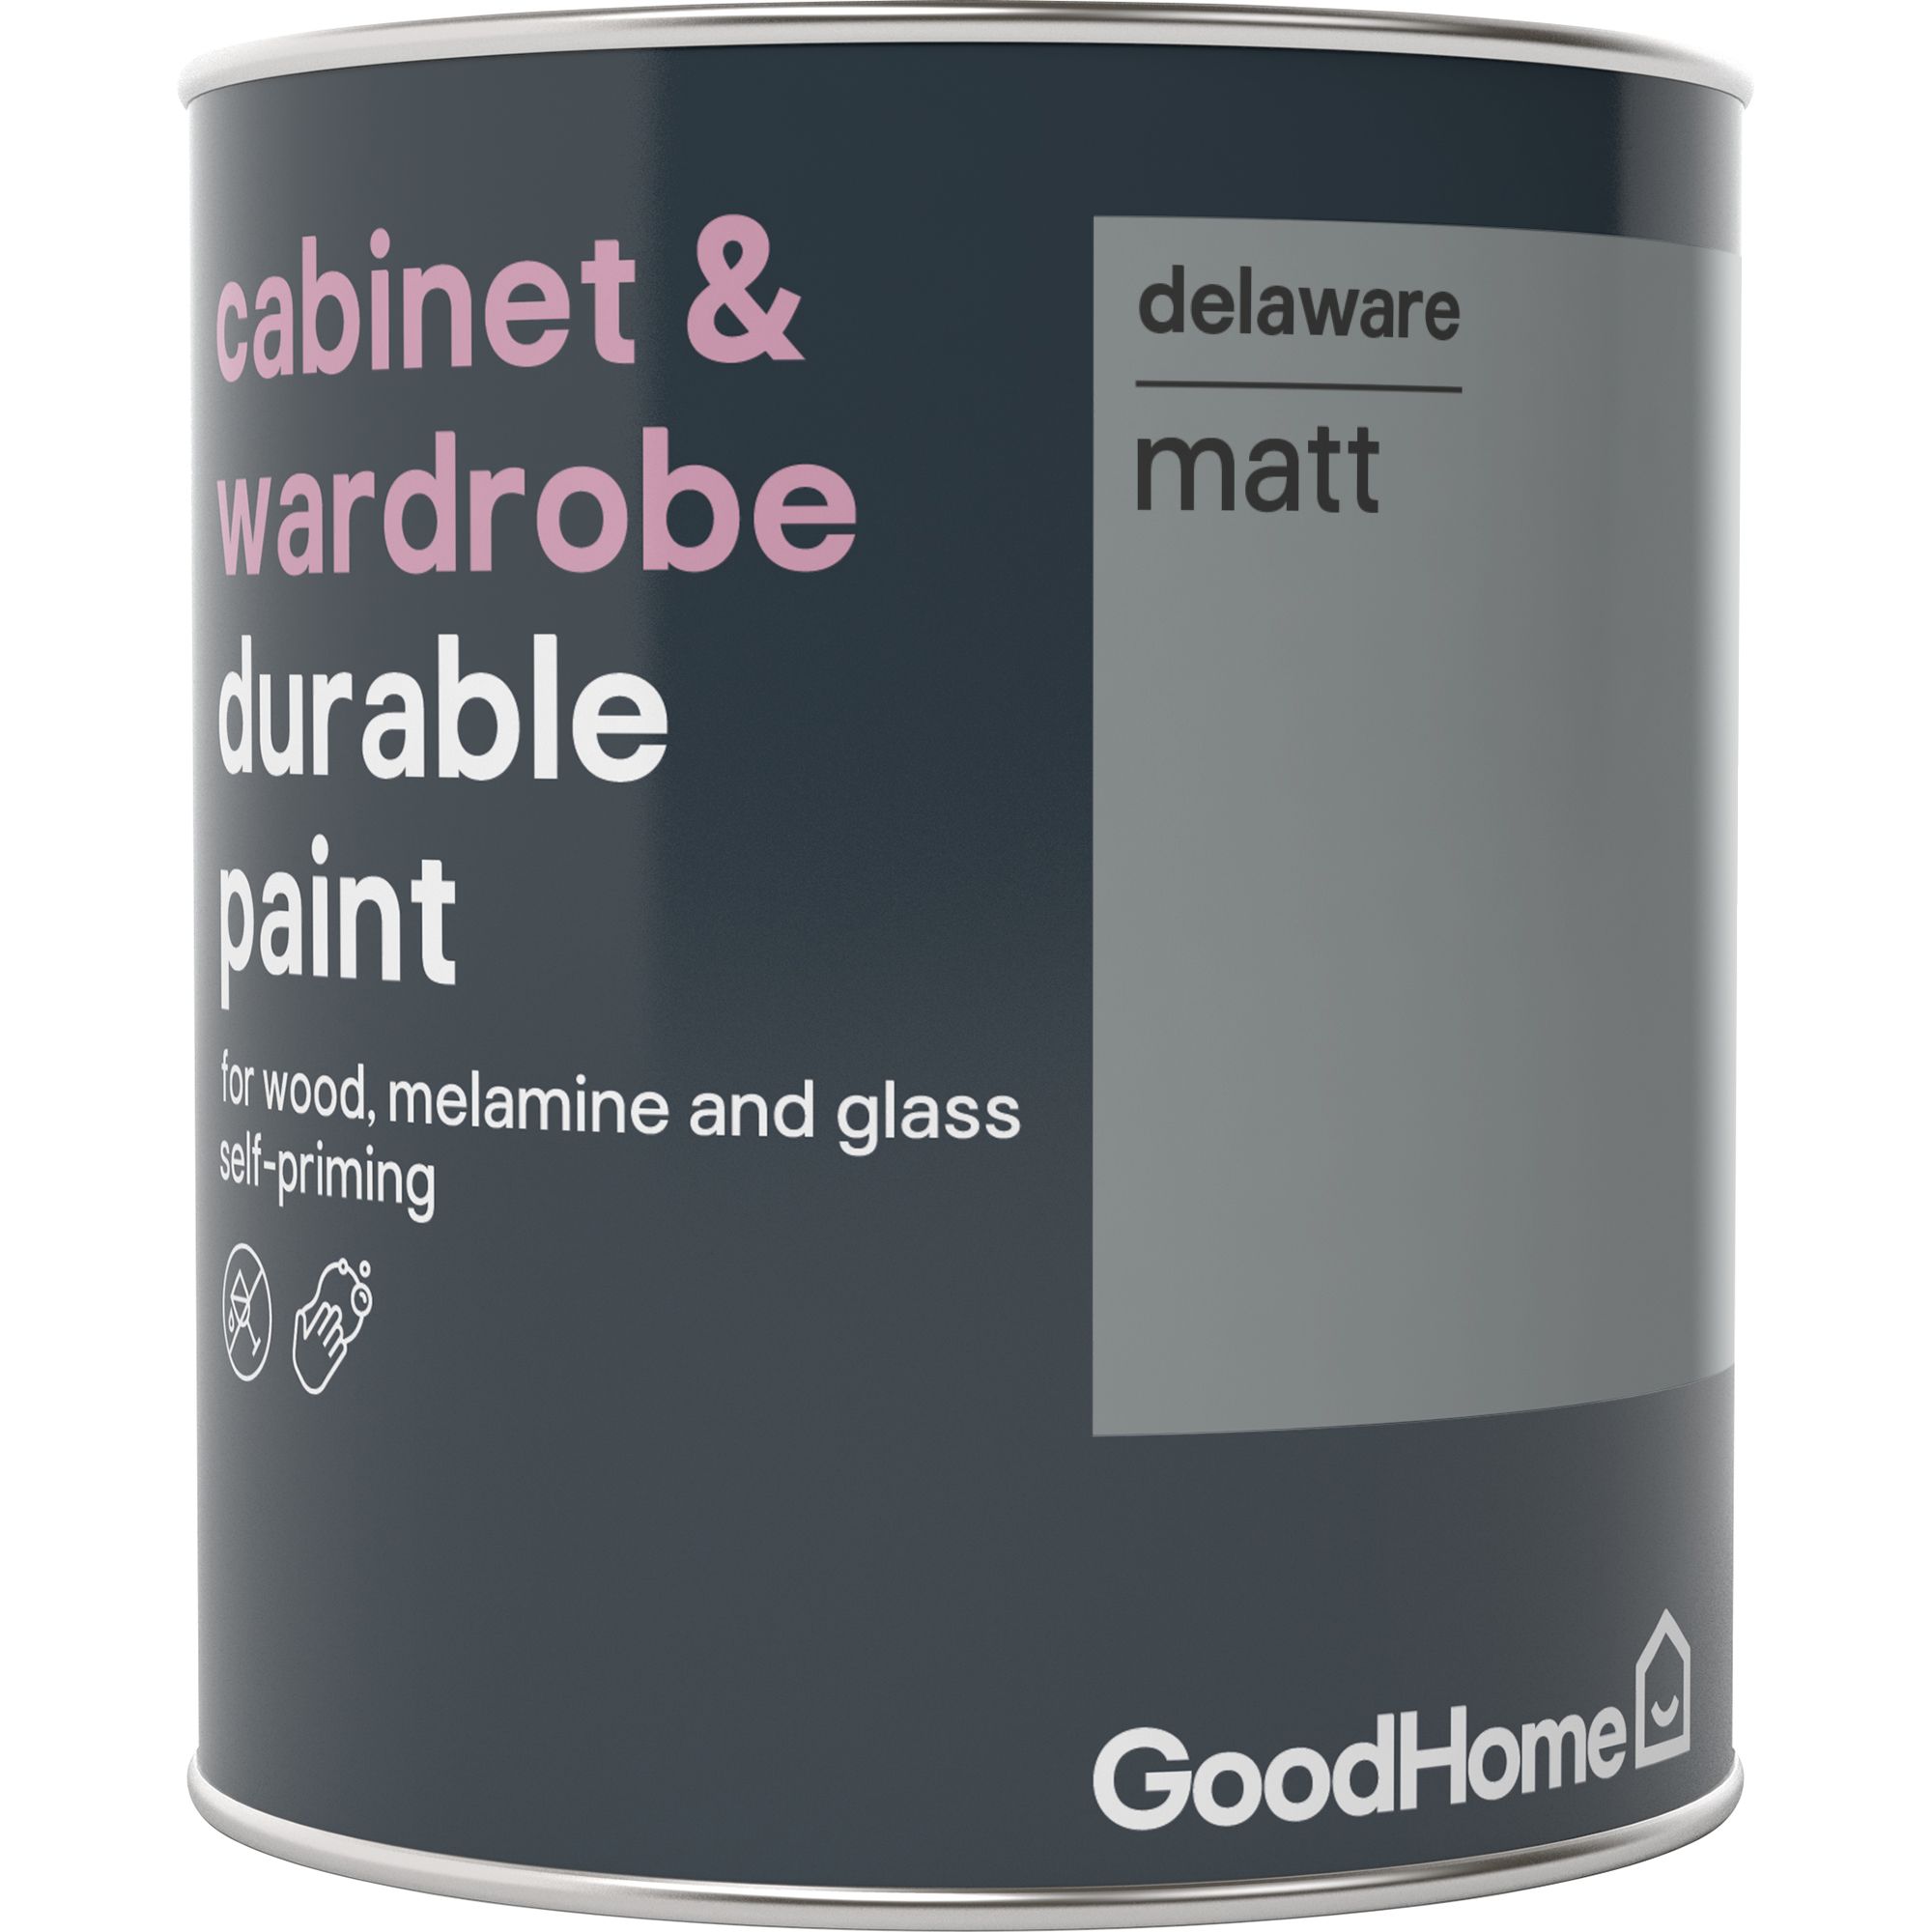 Goodhome Durable Delaware Matt Cabinet Wardrobe Paint 0 75l